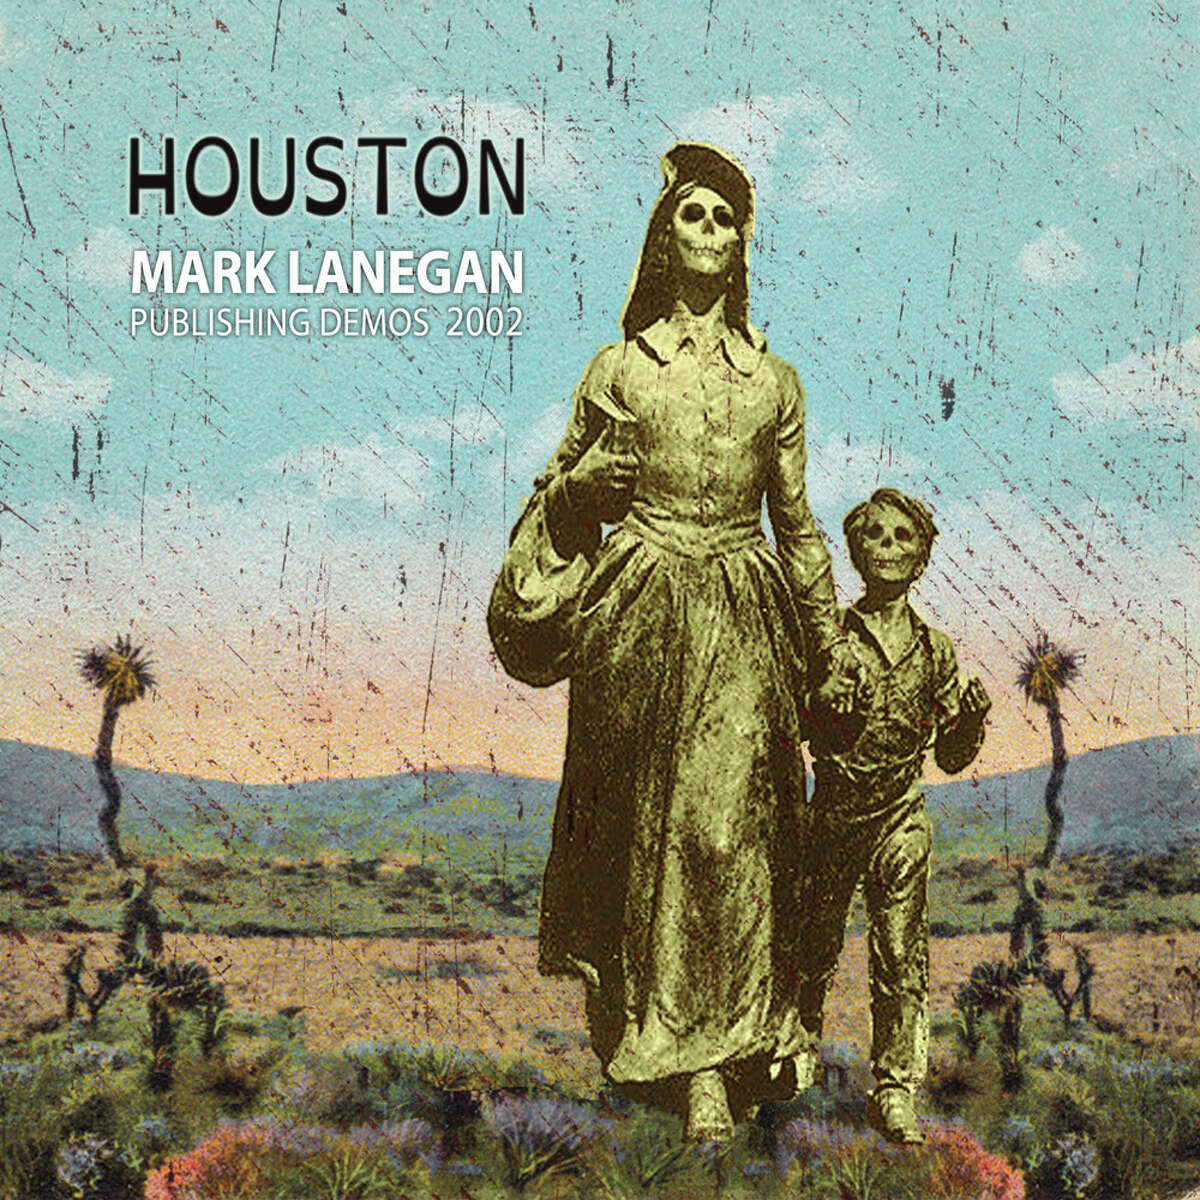 "Houston" album by Mark Lanegan